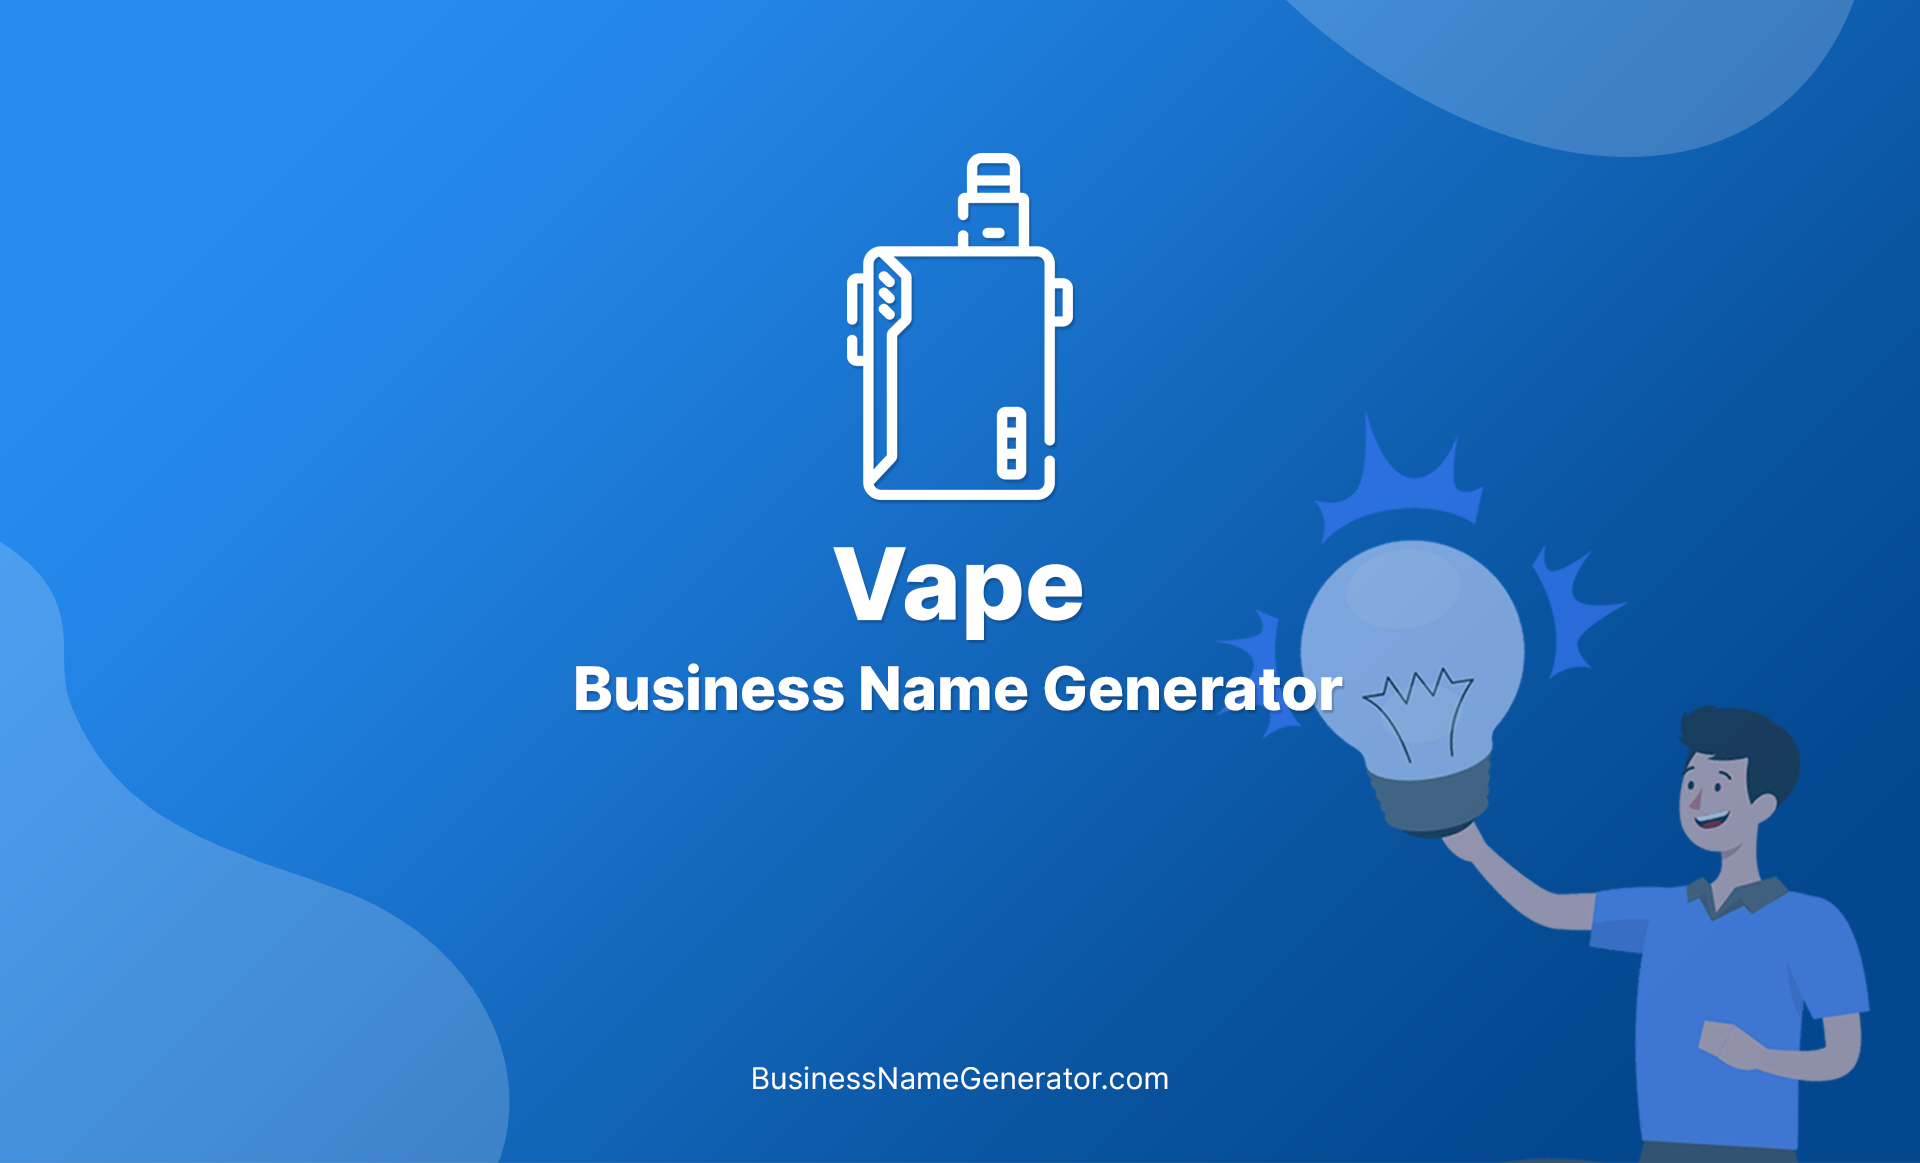 Vape Business Name Generator